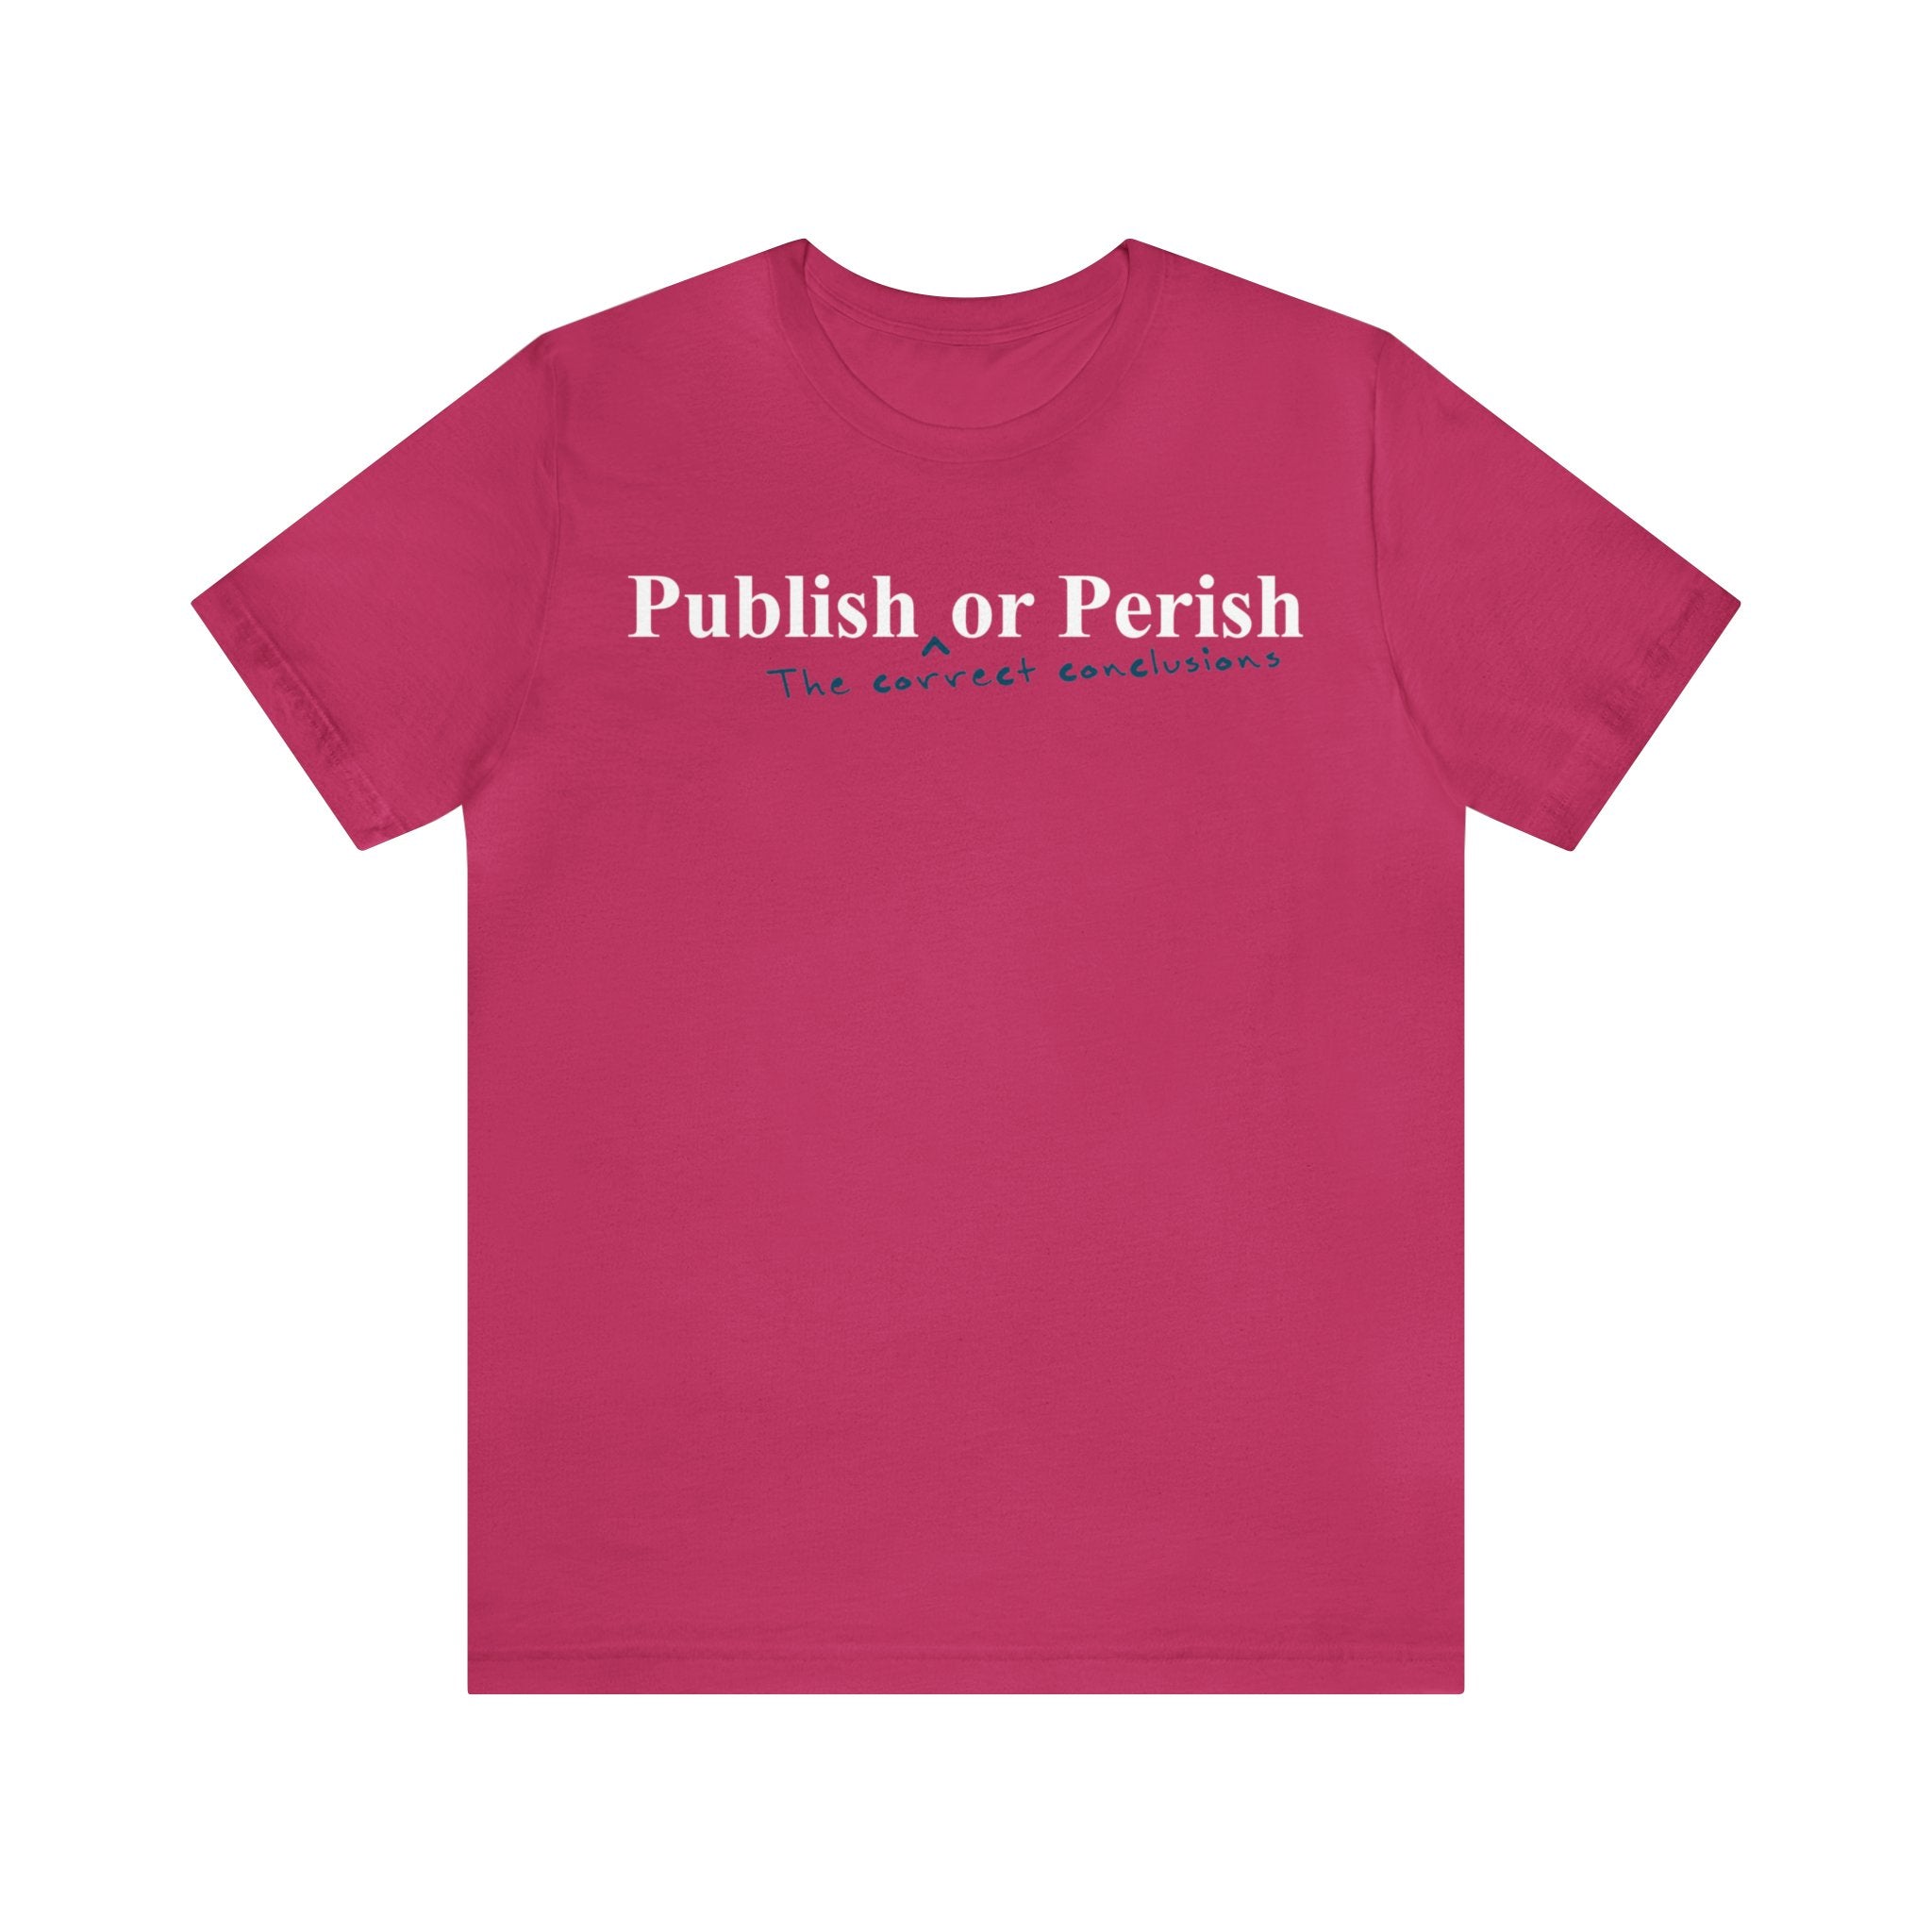 Publish _the correct conclusions_ or Perish